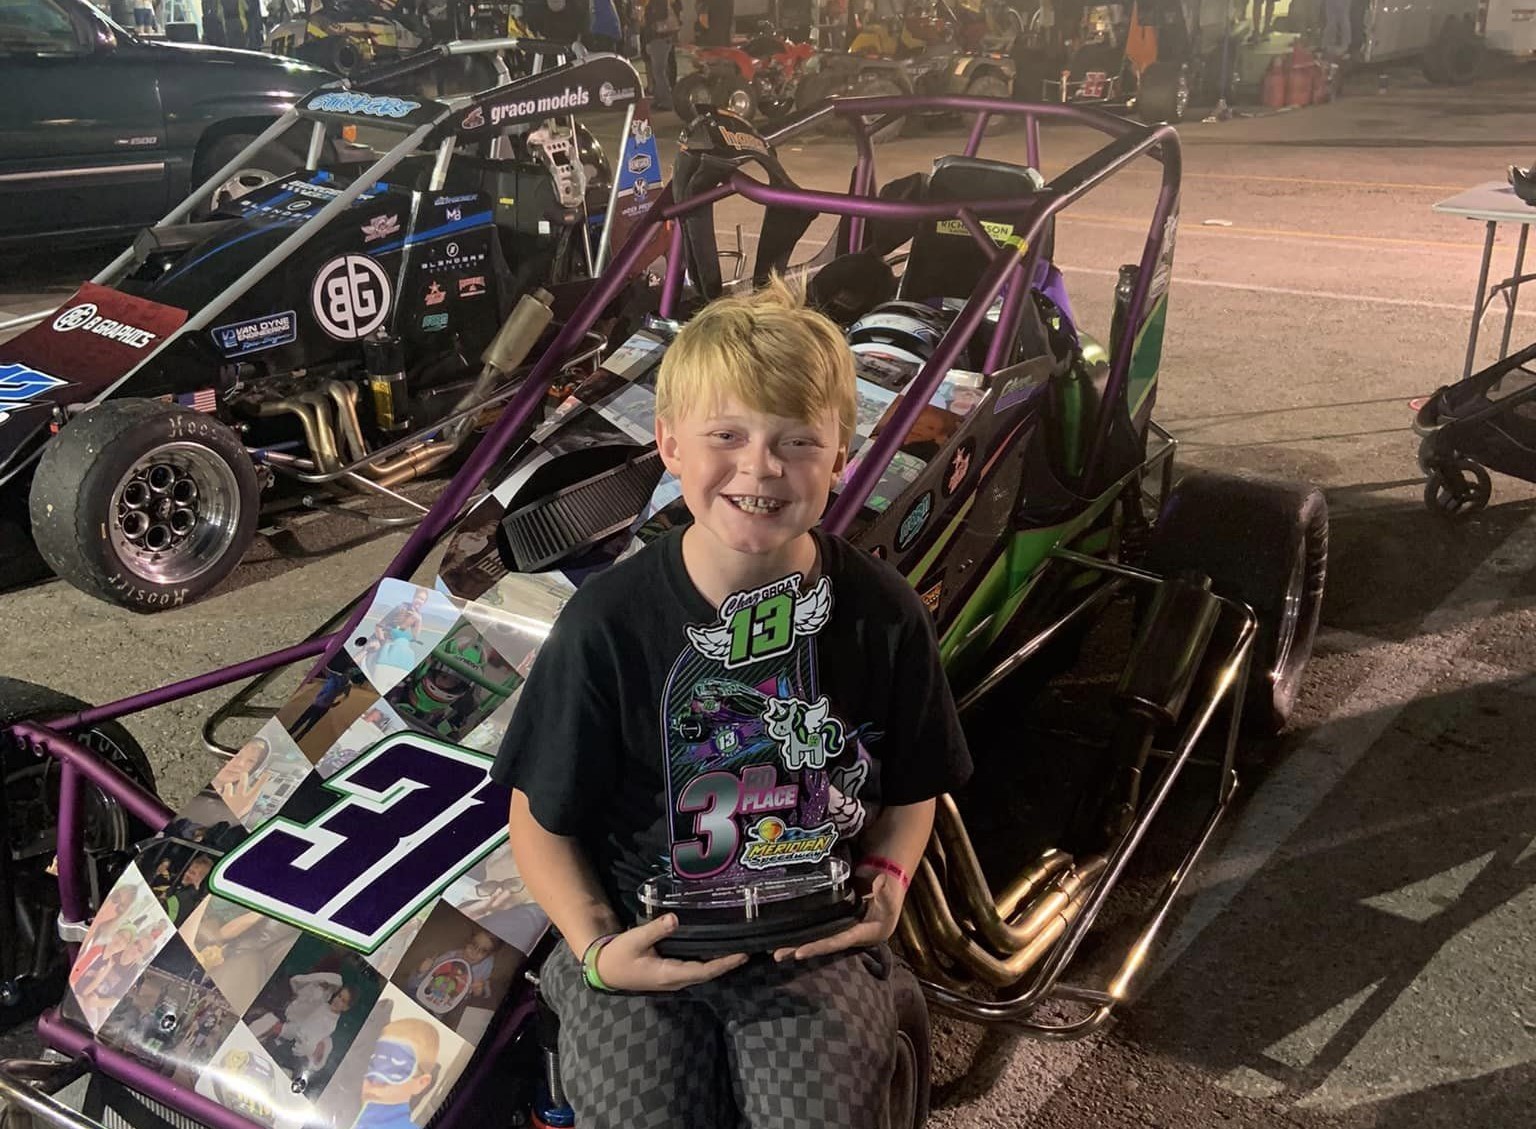 A 12-Year Old Racing Champion—AJ Luttmer